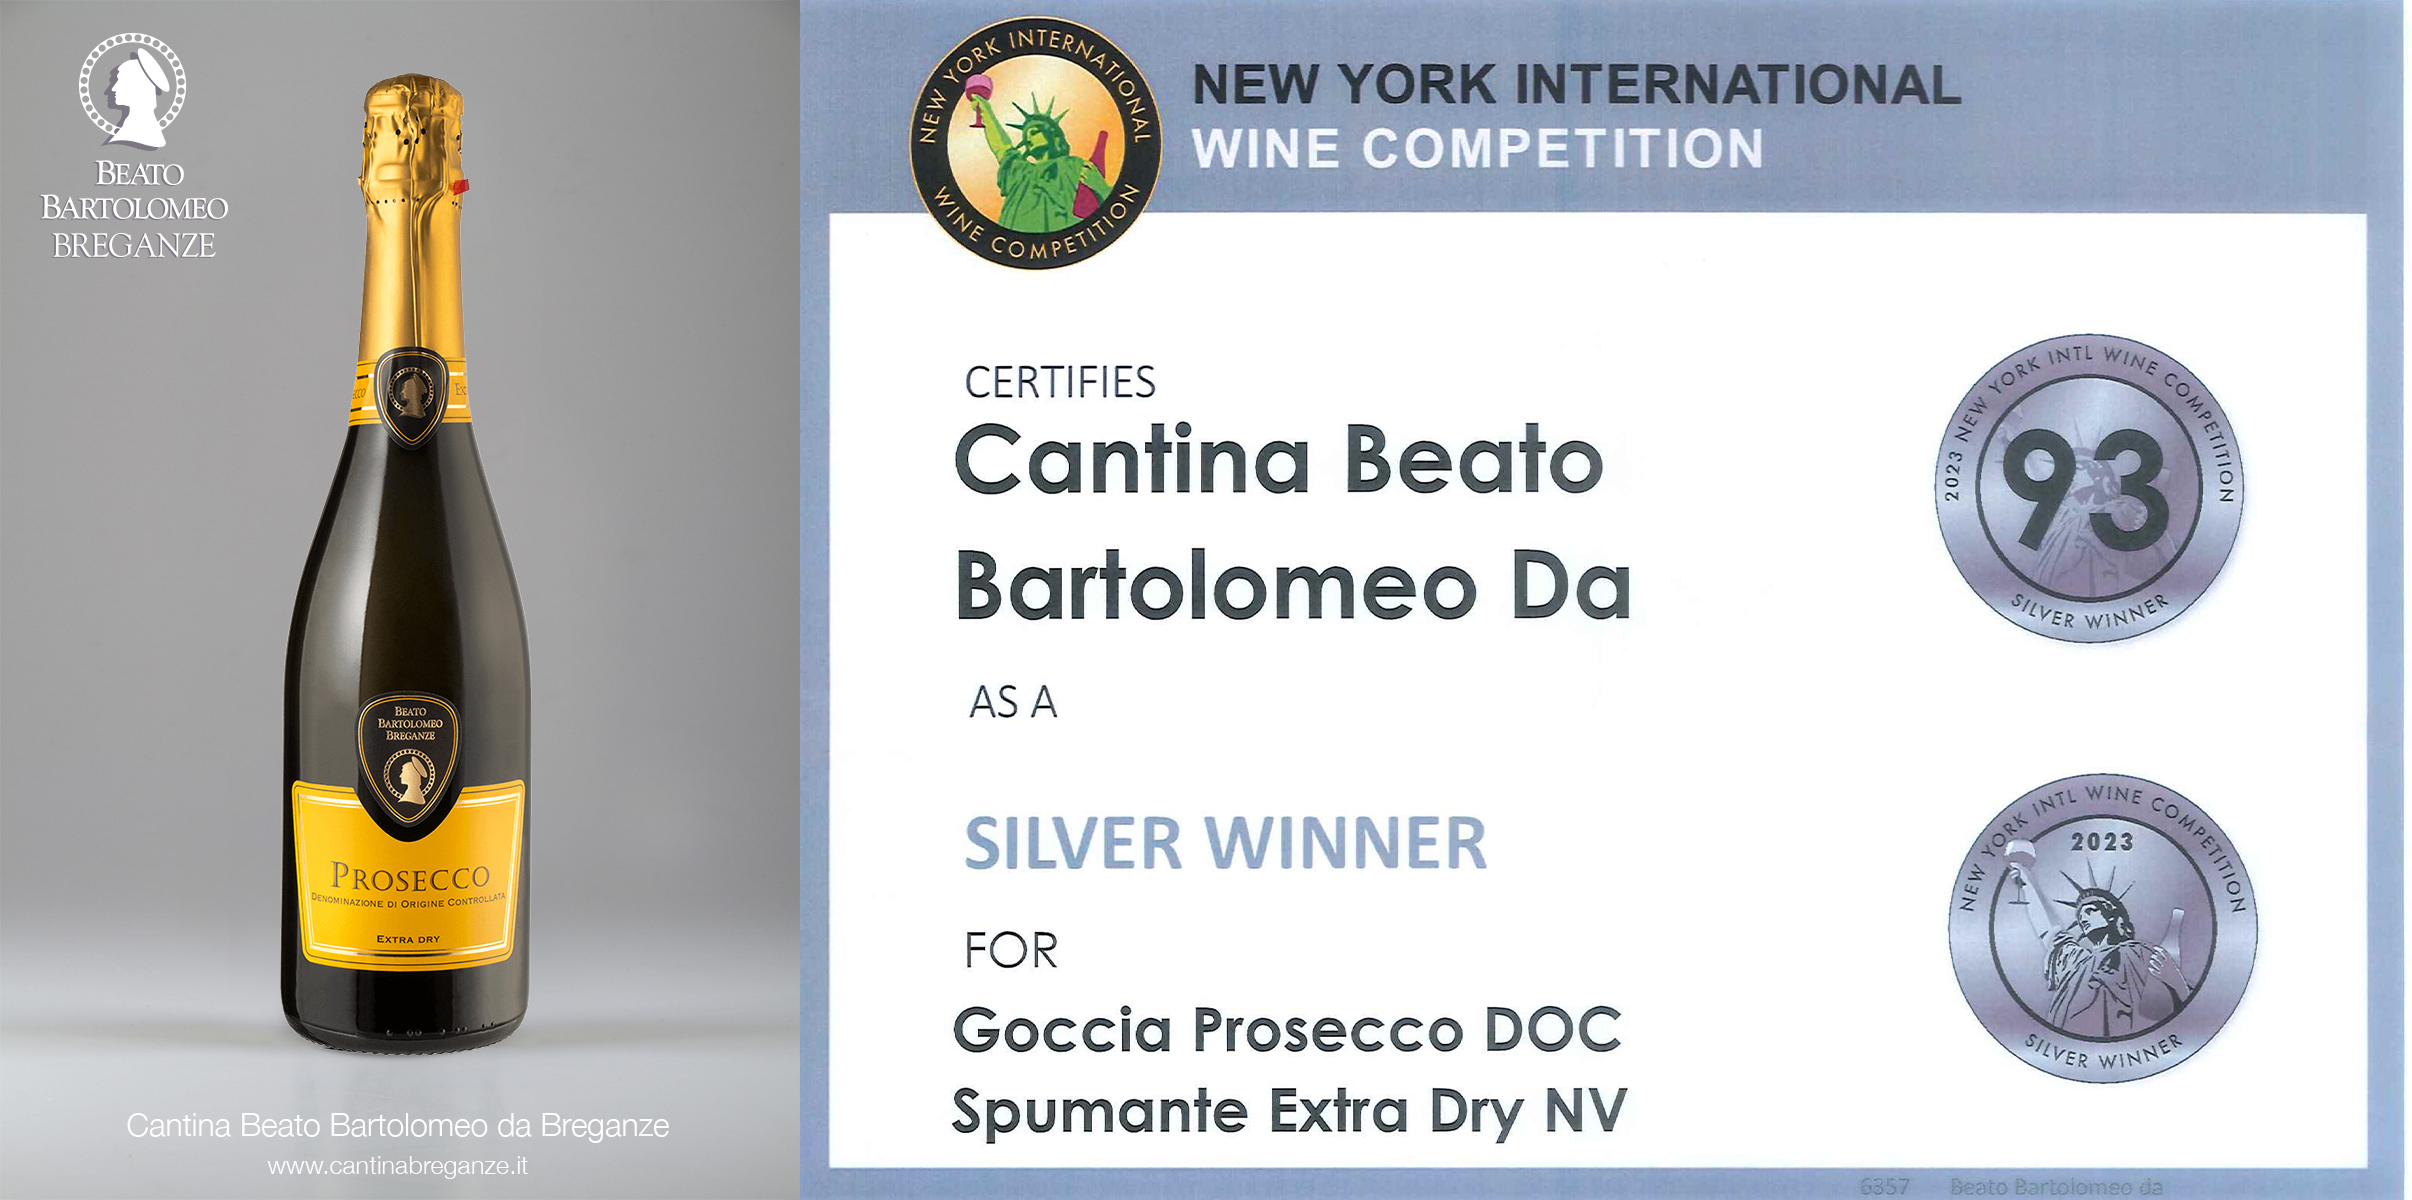 Goccia Prosecco DOC Spumante Extra Dry NV New York International Wine Competition